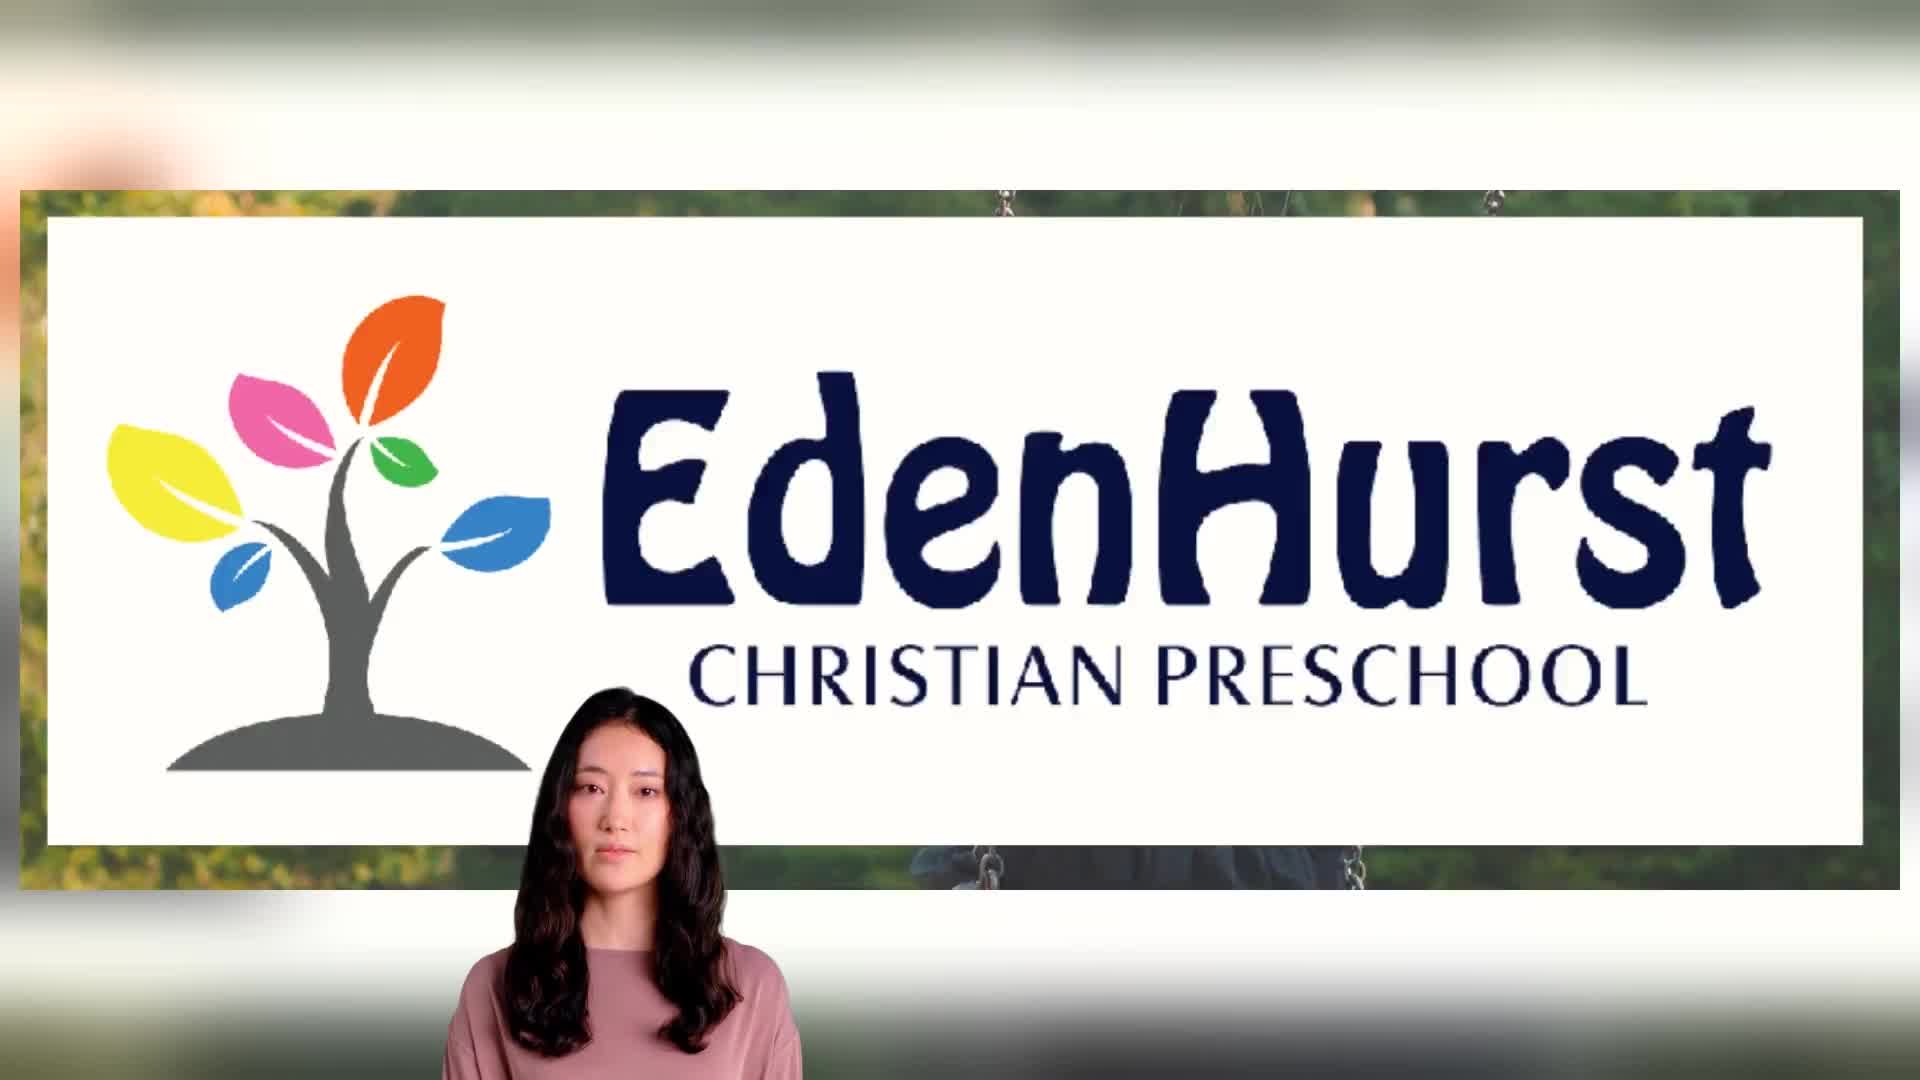 EdenHurst Christian Preschool & Kindergarten Schools in Glendale